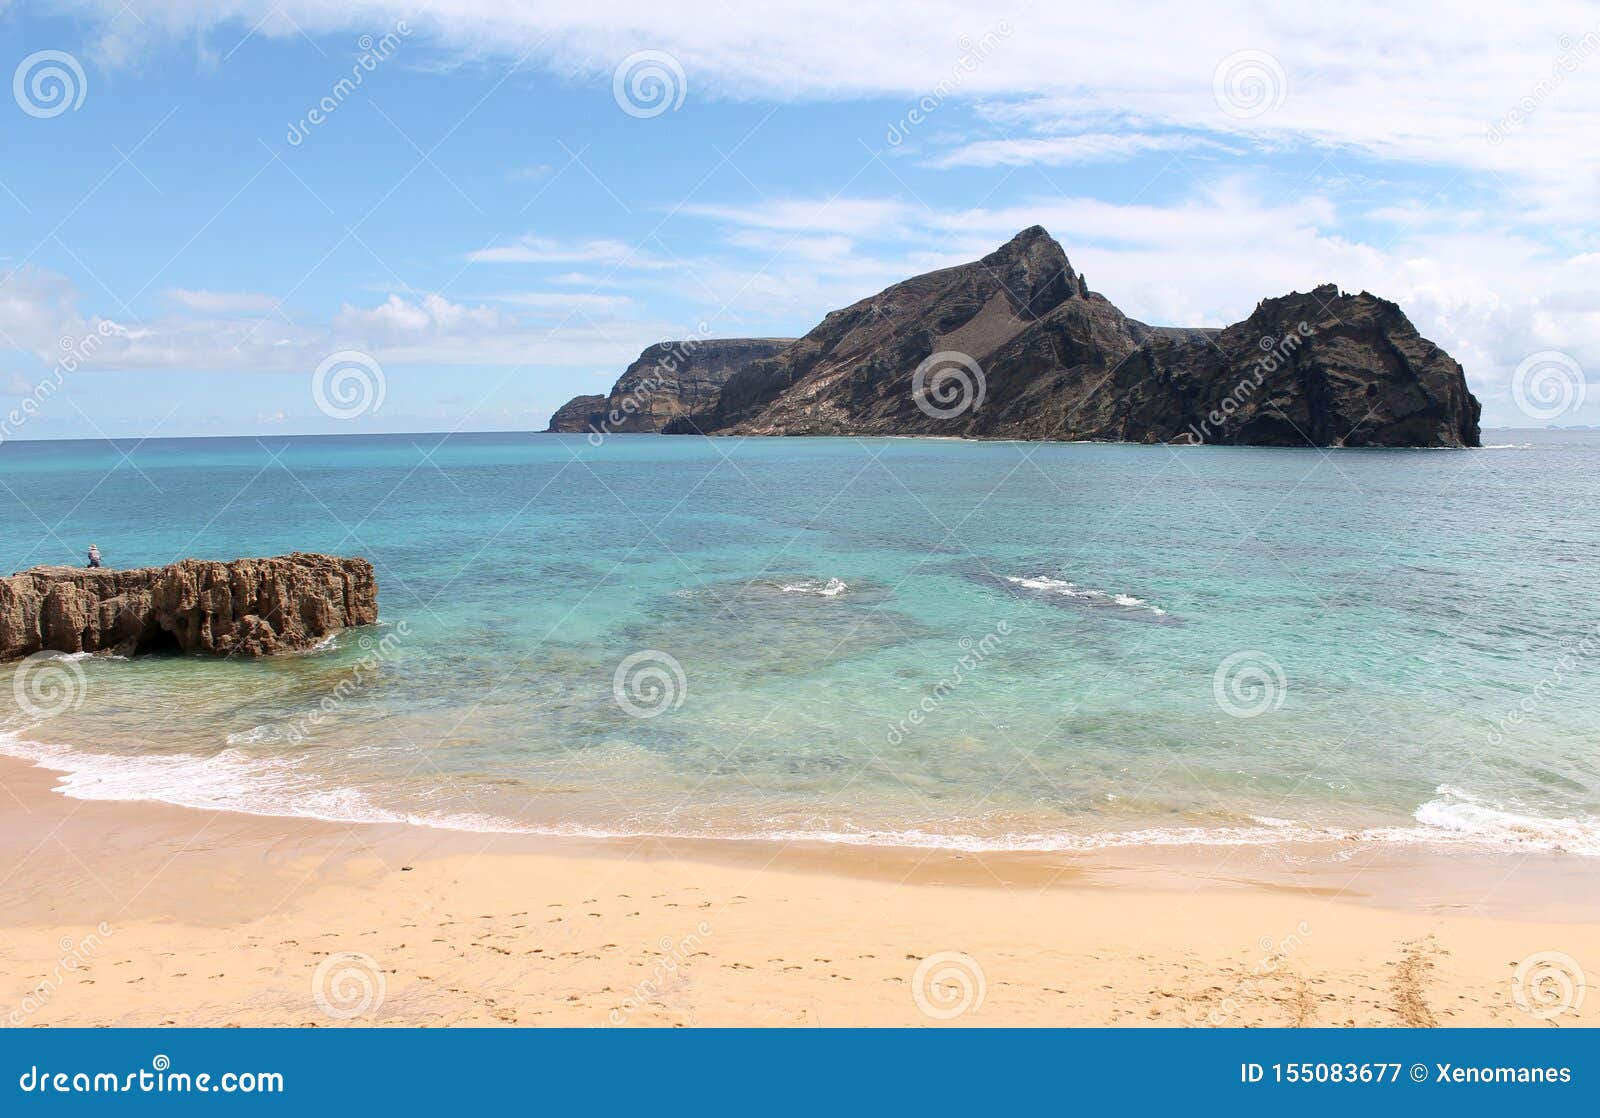 porto santo warm bright waters, near islet of cal, calheta beach